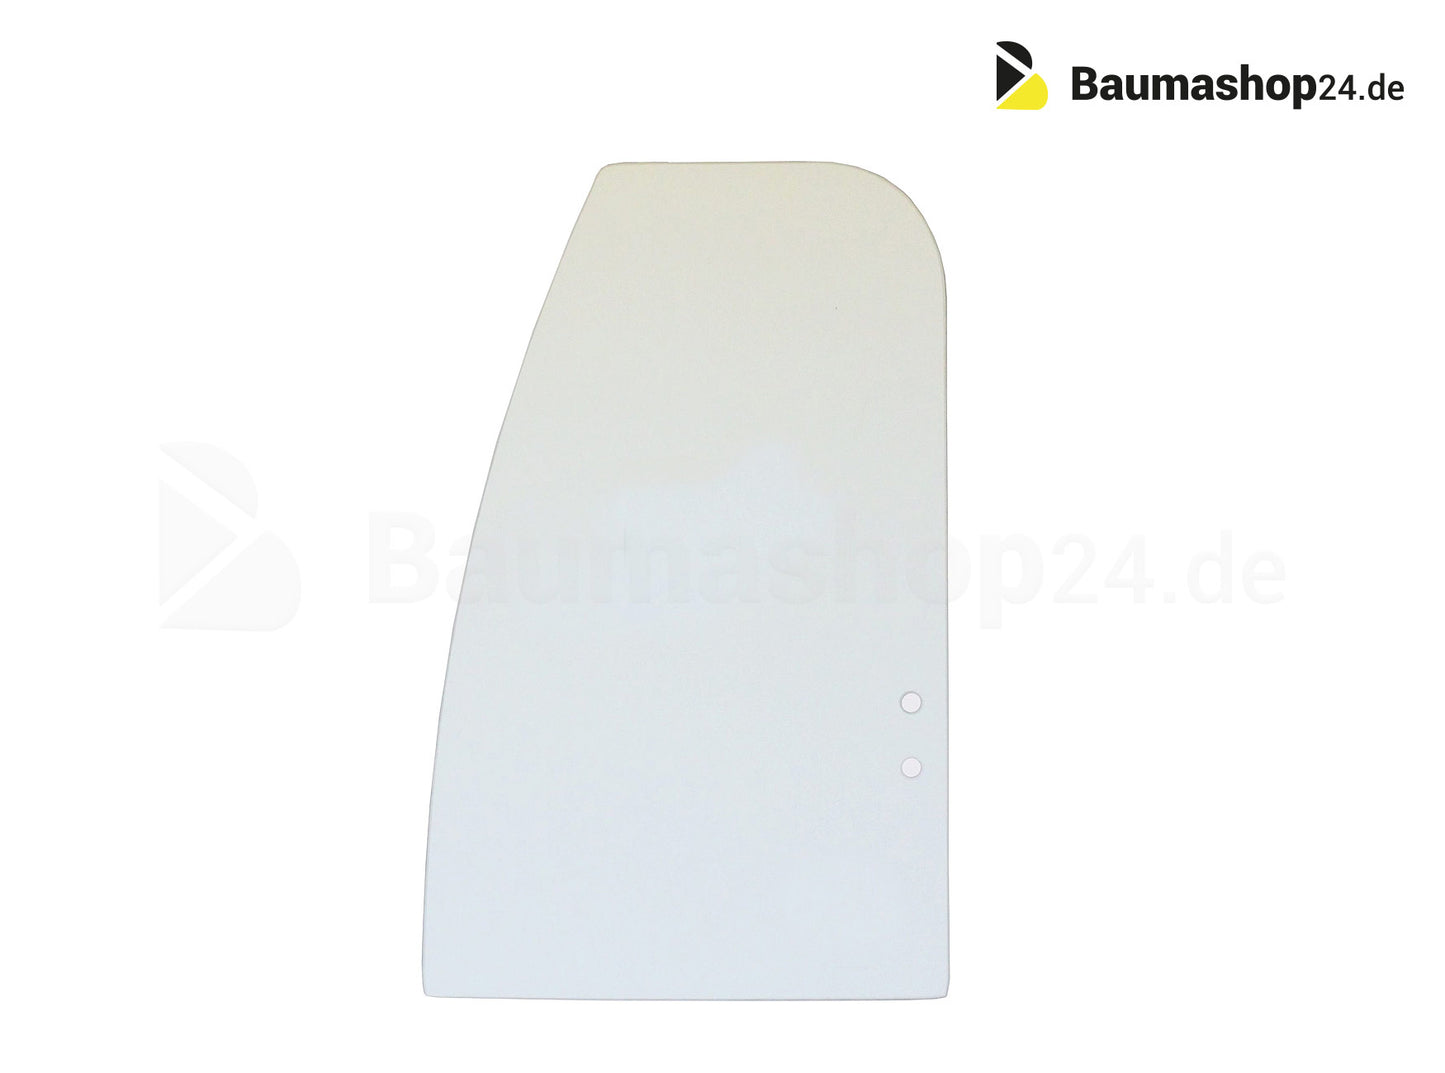 Komatsu Left Rear Door Glass 22B-54-27241 for PC138US-8 | PC138USLC-8 | PC228US-8 | PC228USLC-8